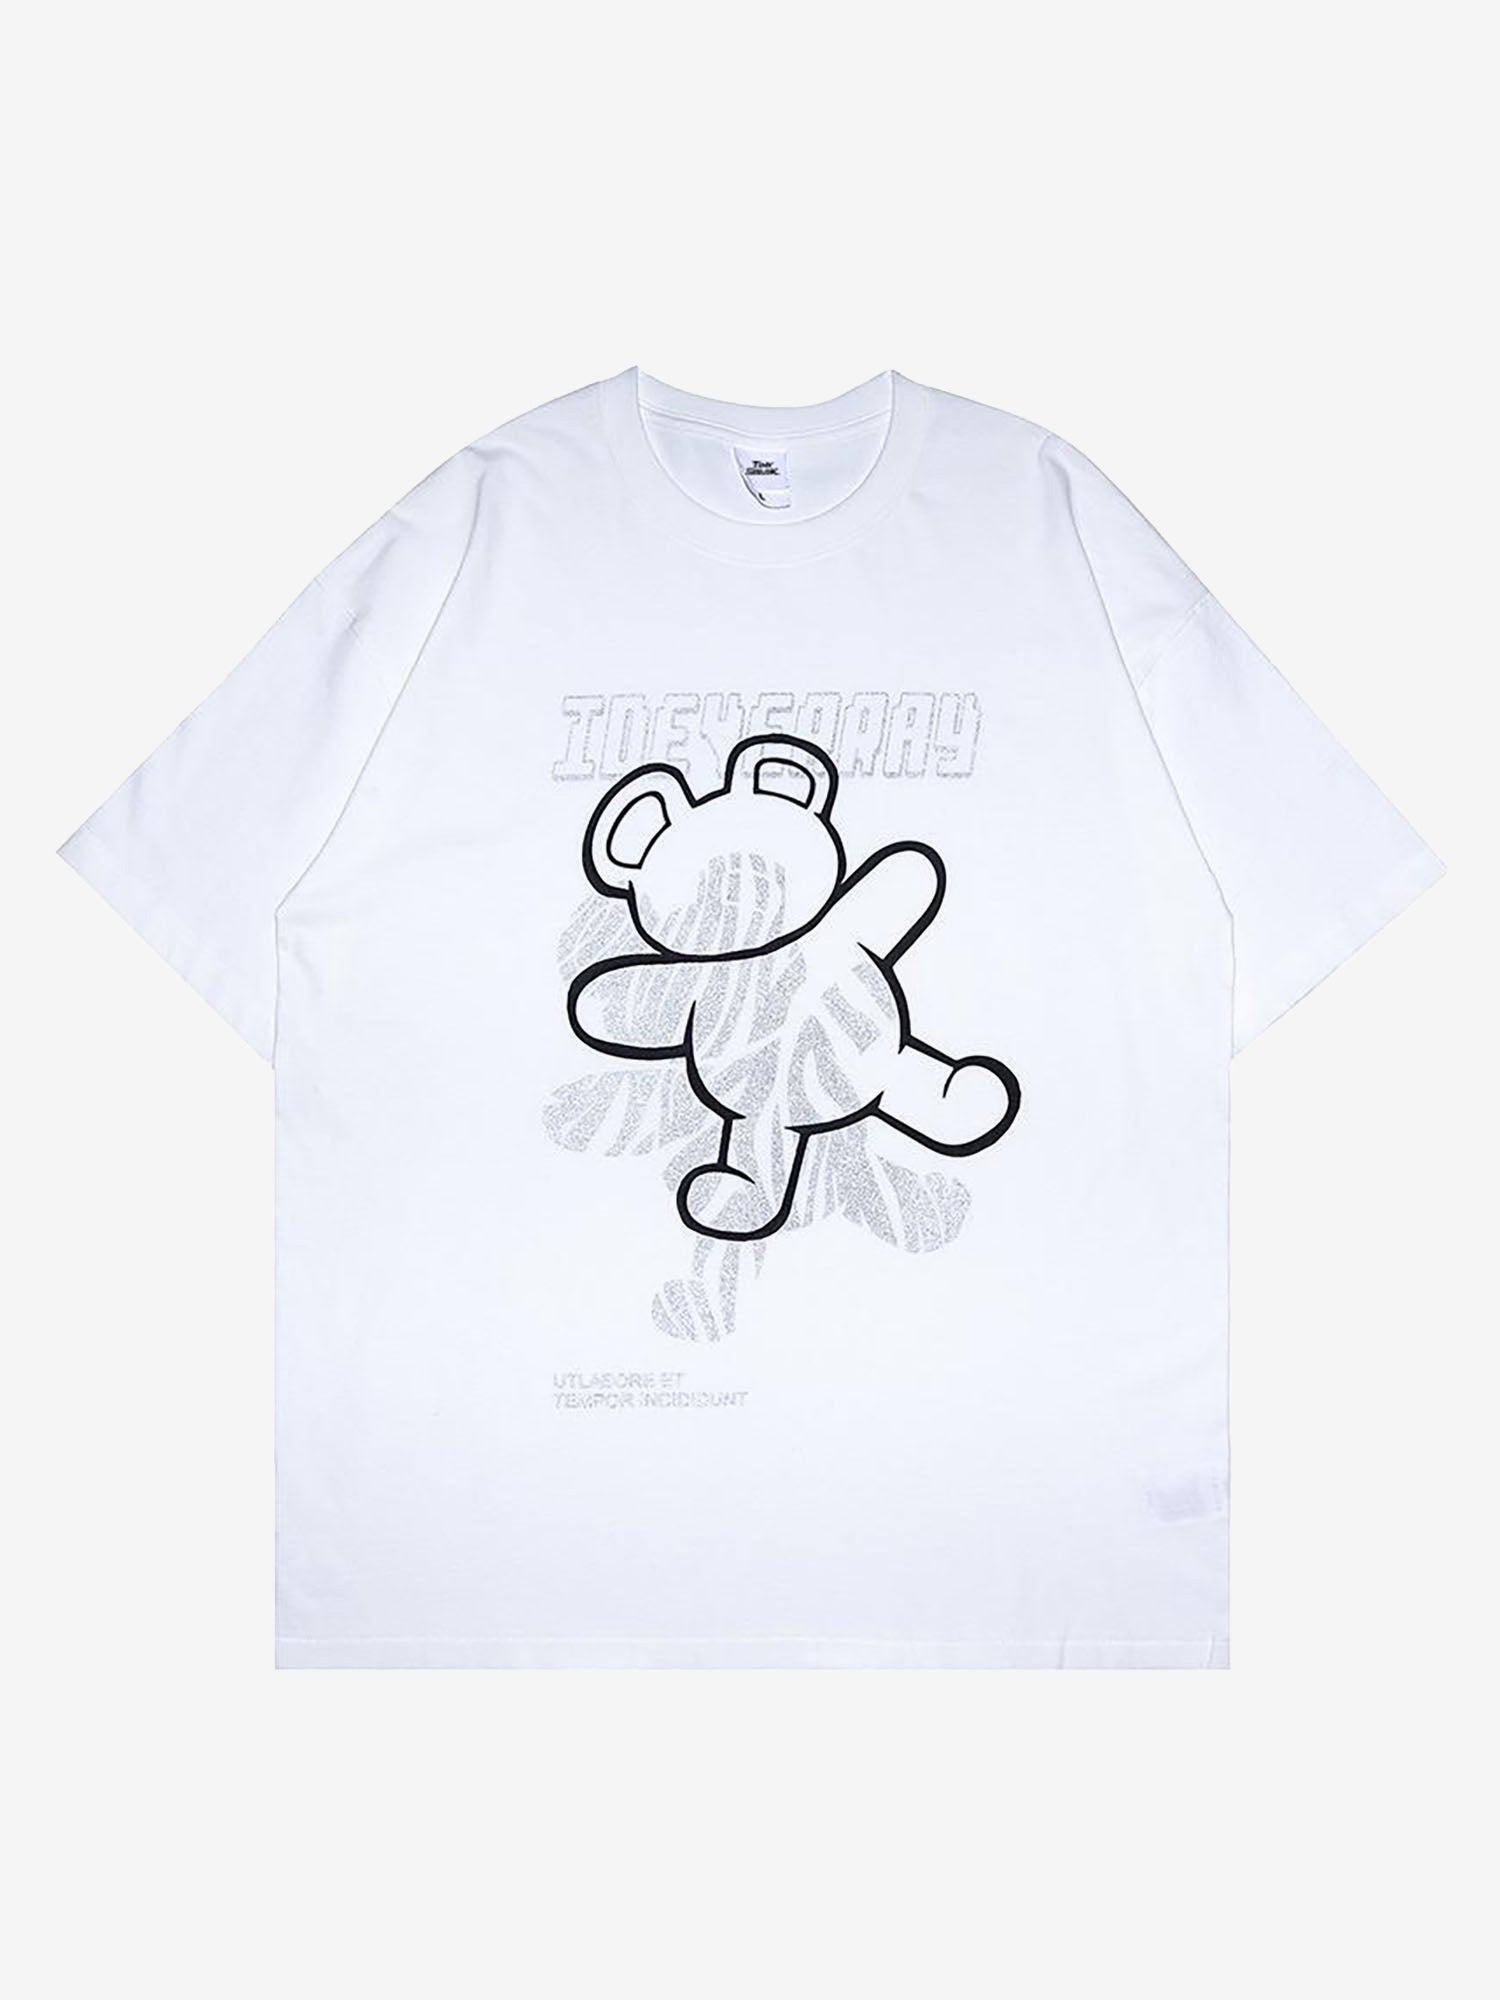 Justnotag T-shirt a maniche corte con orso di cartone animato Zebra Strip dipinta a mano